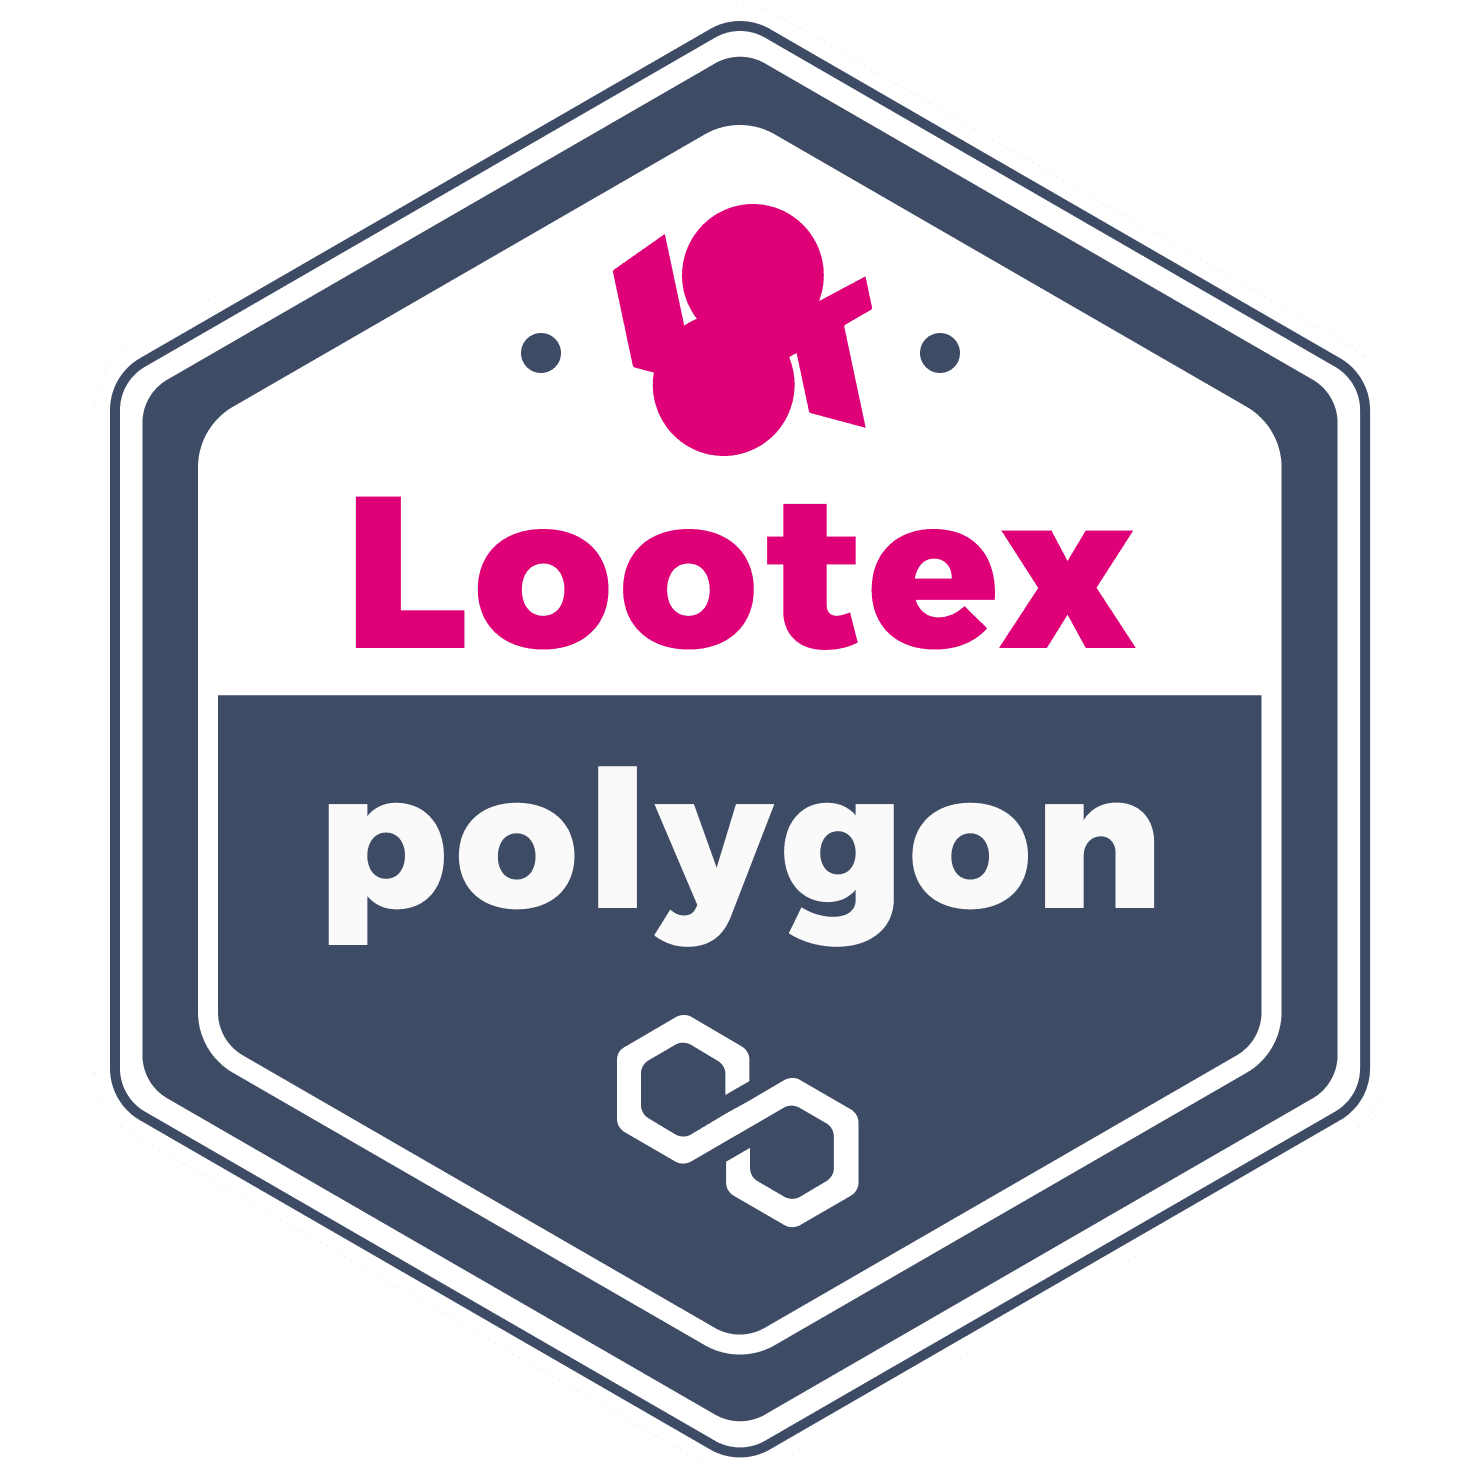 Lootex & Polygon (previously Matic) integration